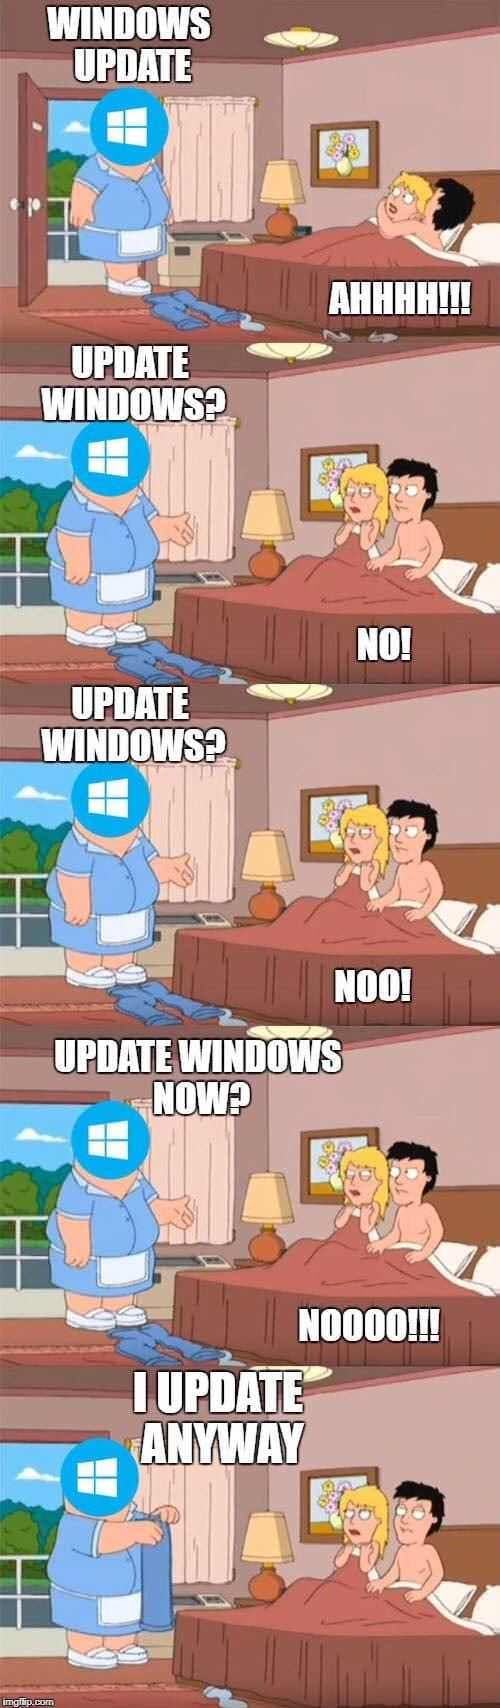 Classic Windows...